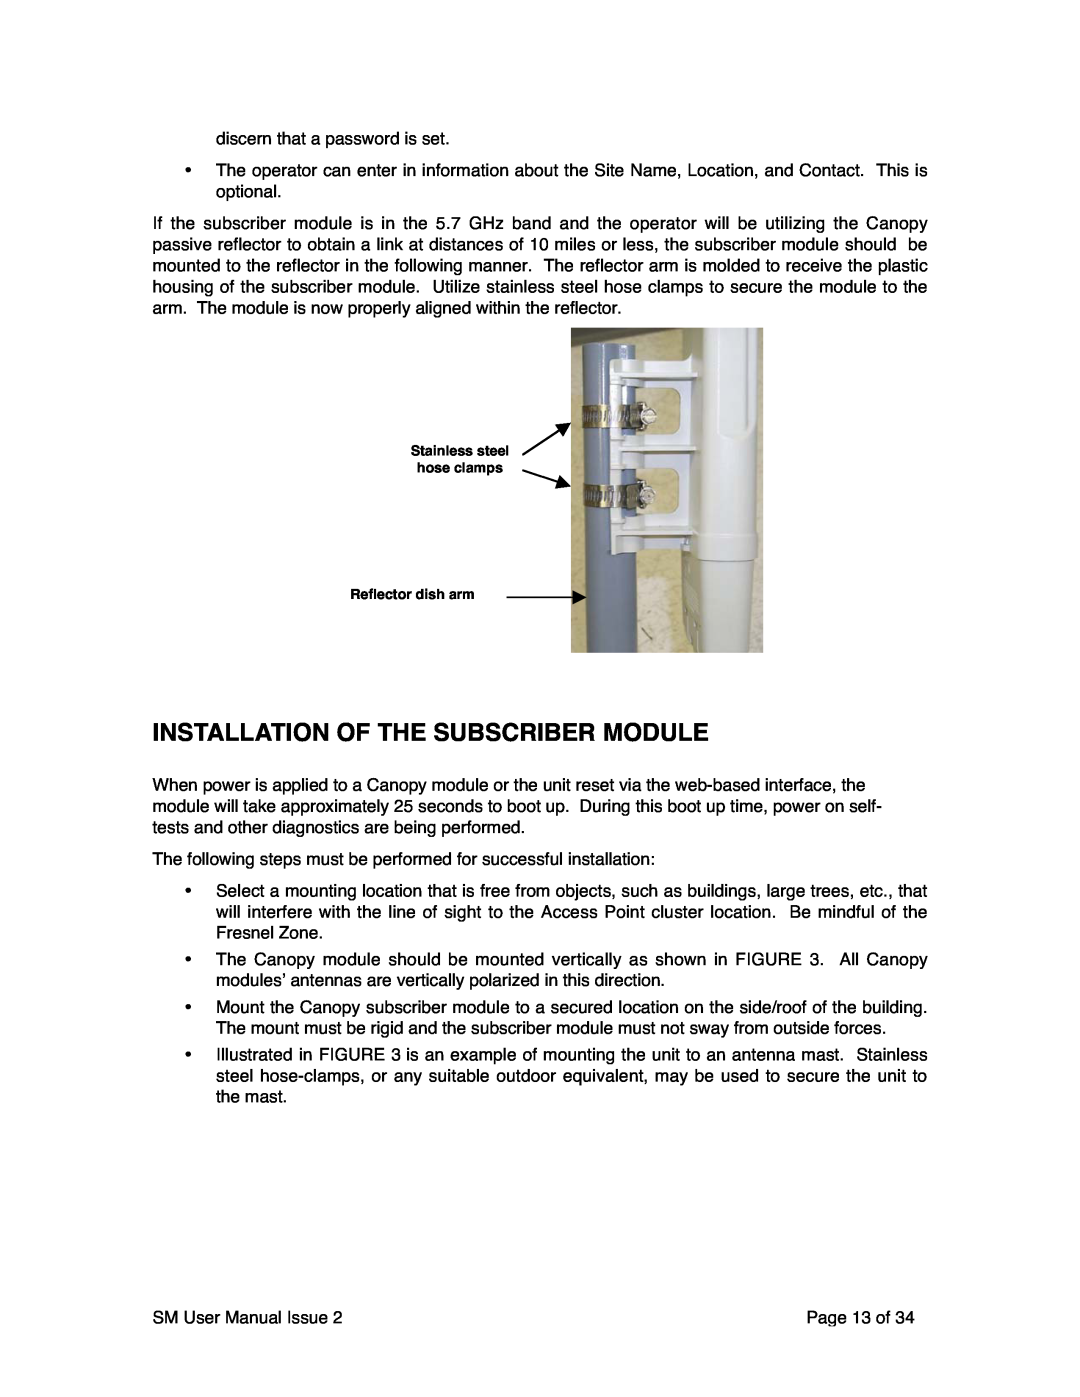 Motorola SM02-UG-en user manual Installation Of The Subscriber Module, Reflector dish arm 